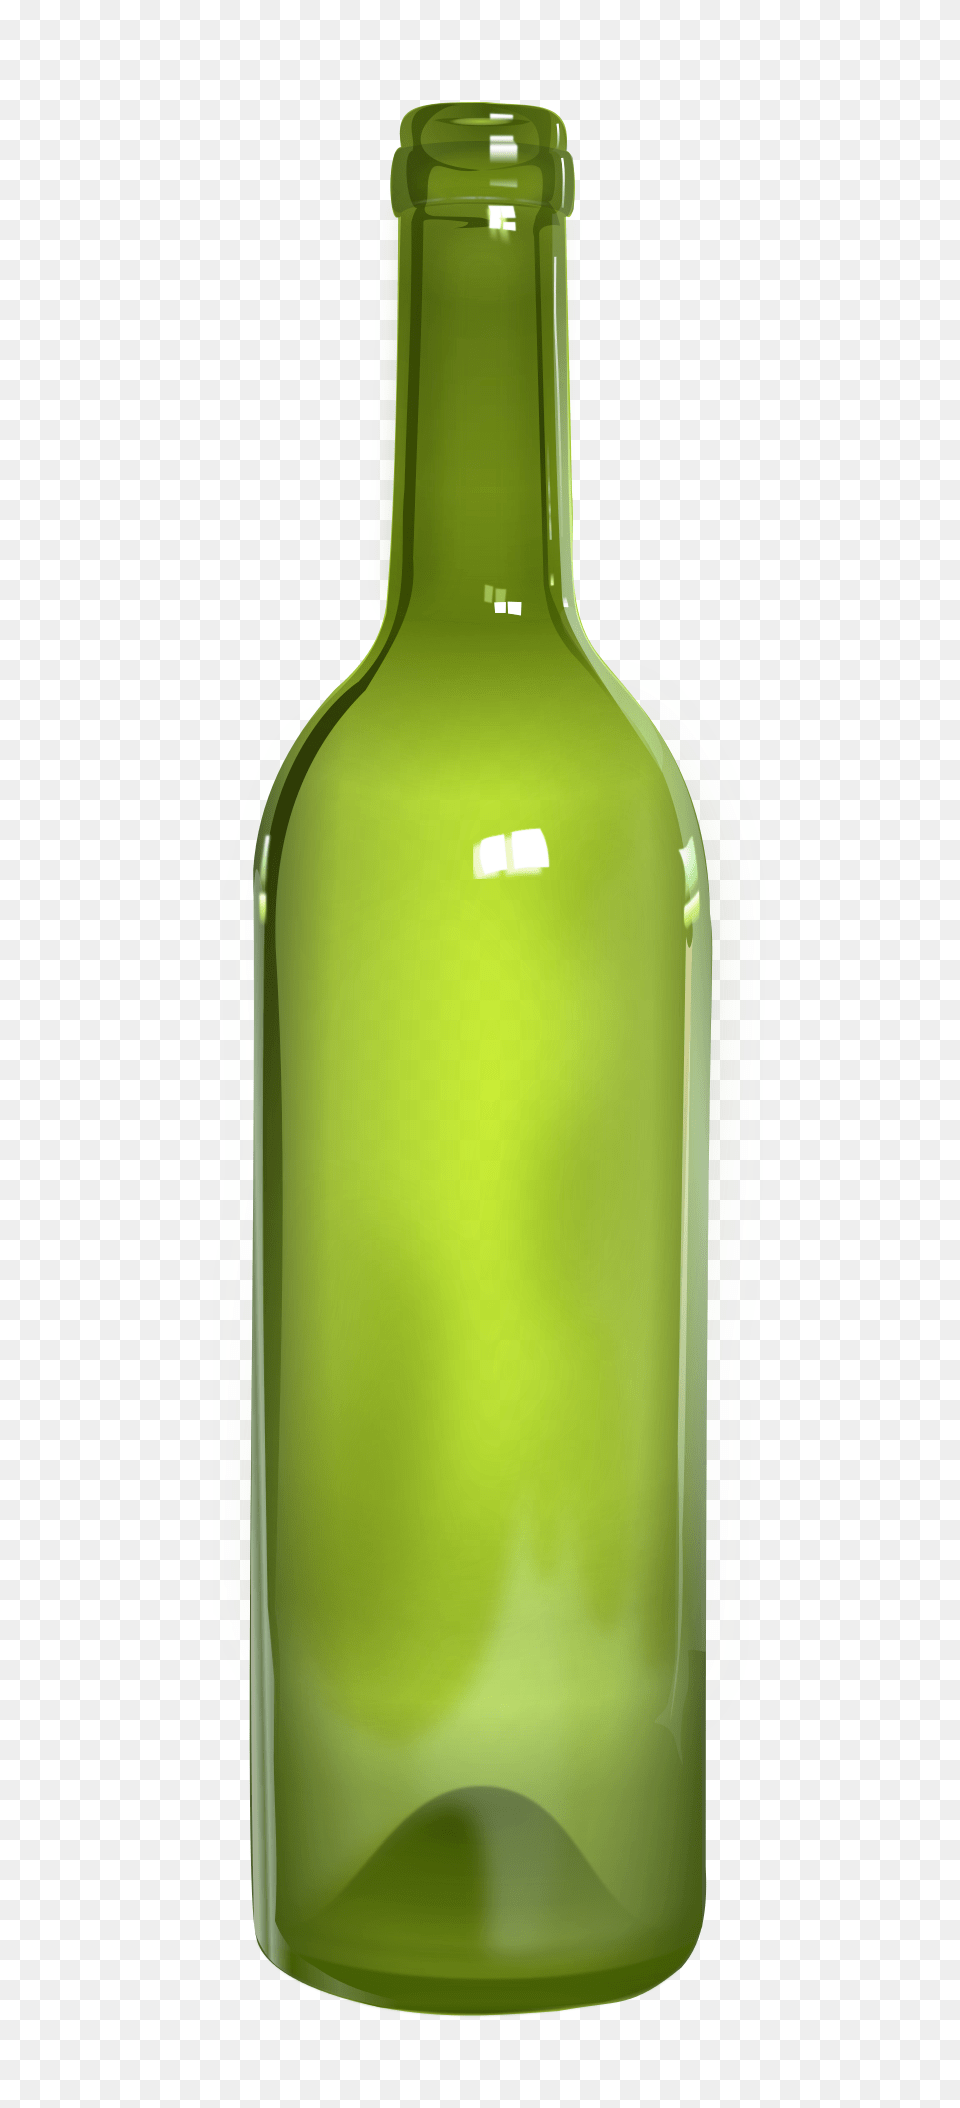 Pngpix Com Bottle Transparent Image, Alcohol, Wine, Liquor, Wine Bottle Free Png